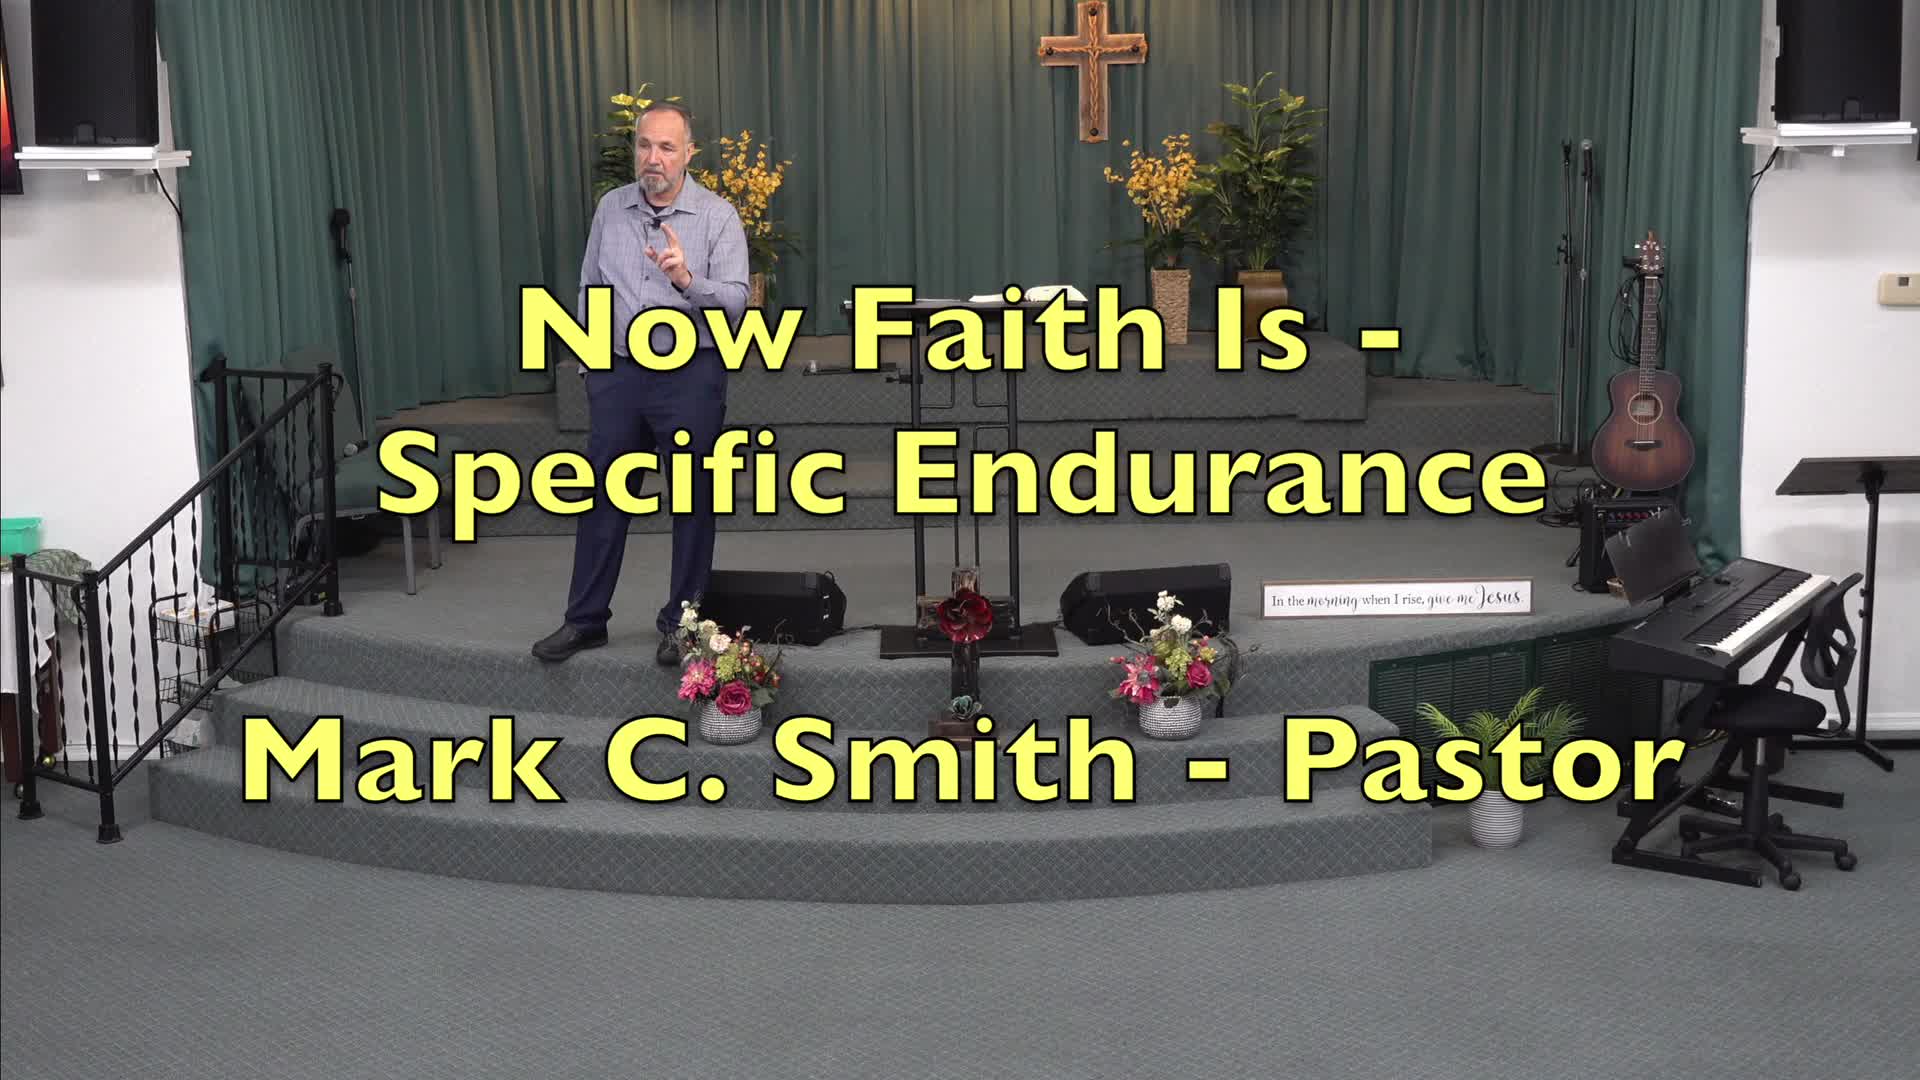 A Now Faith For Specific Endurance